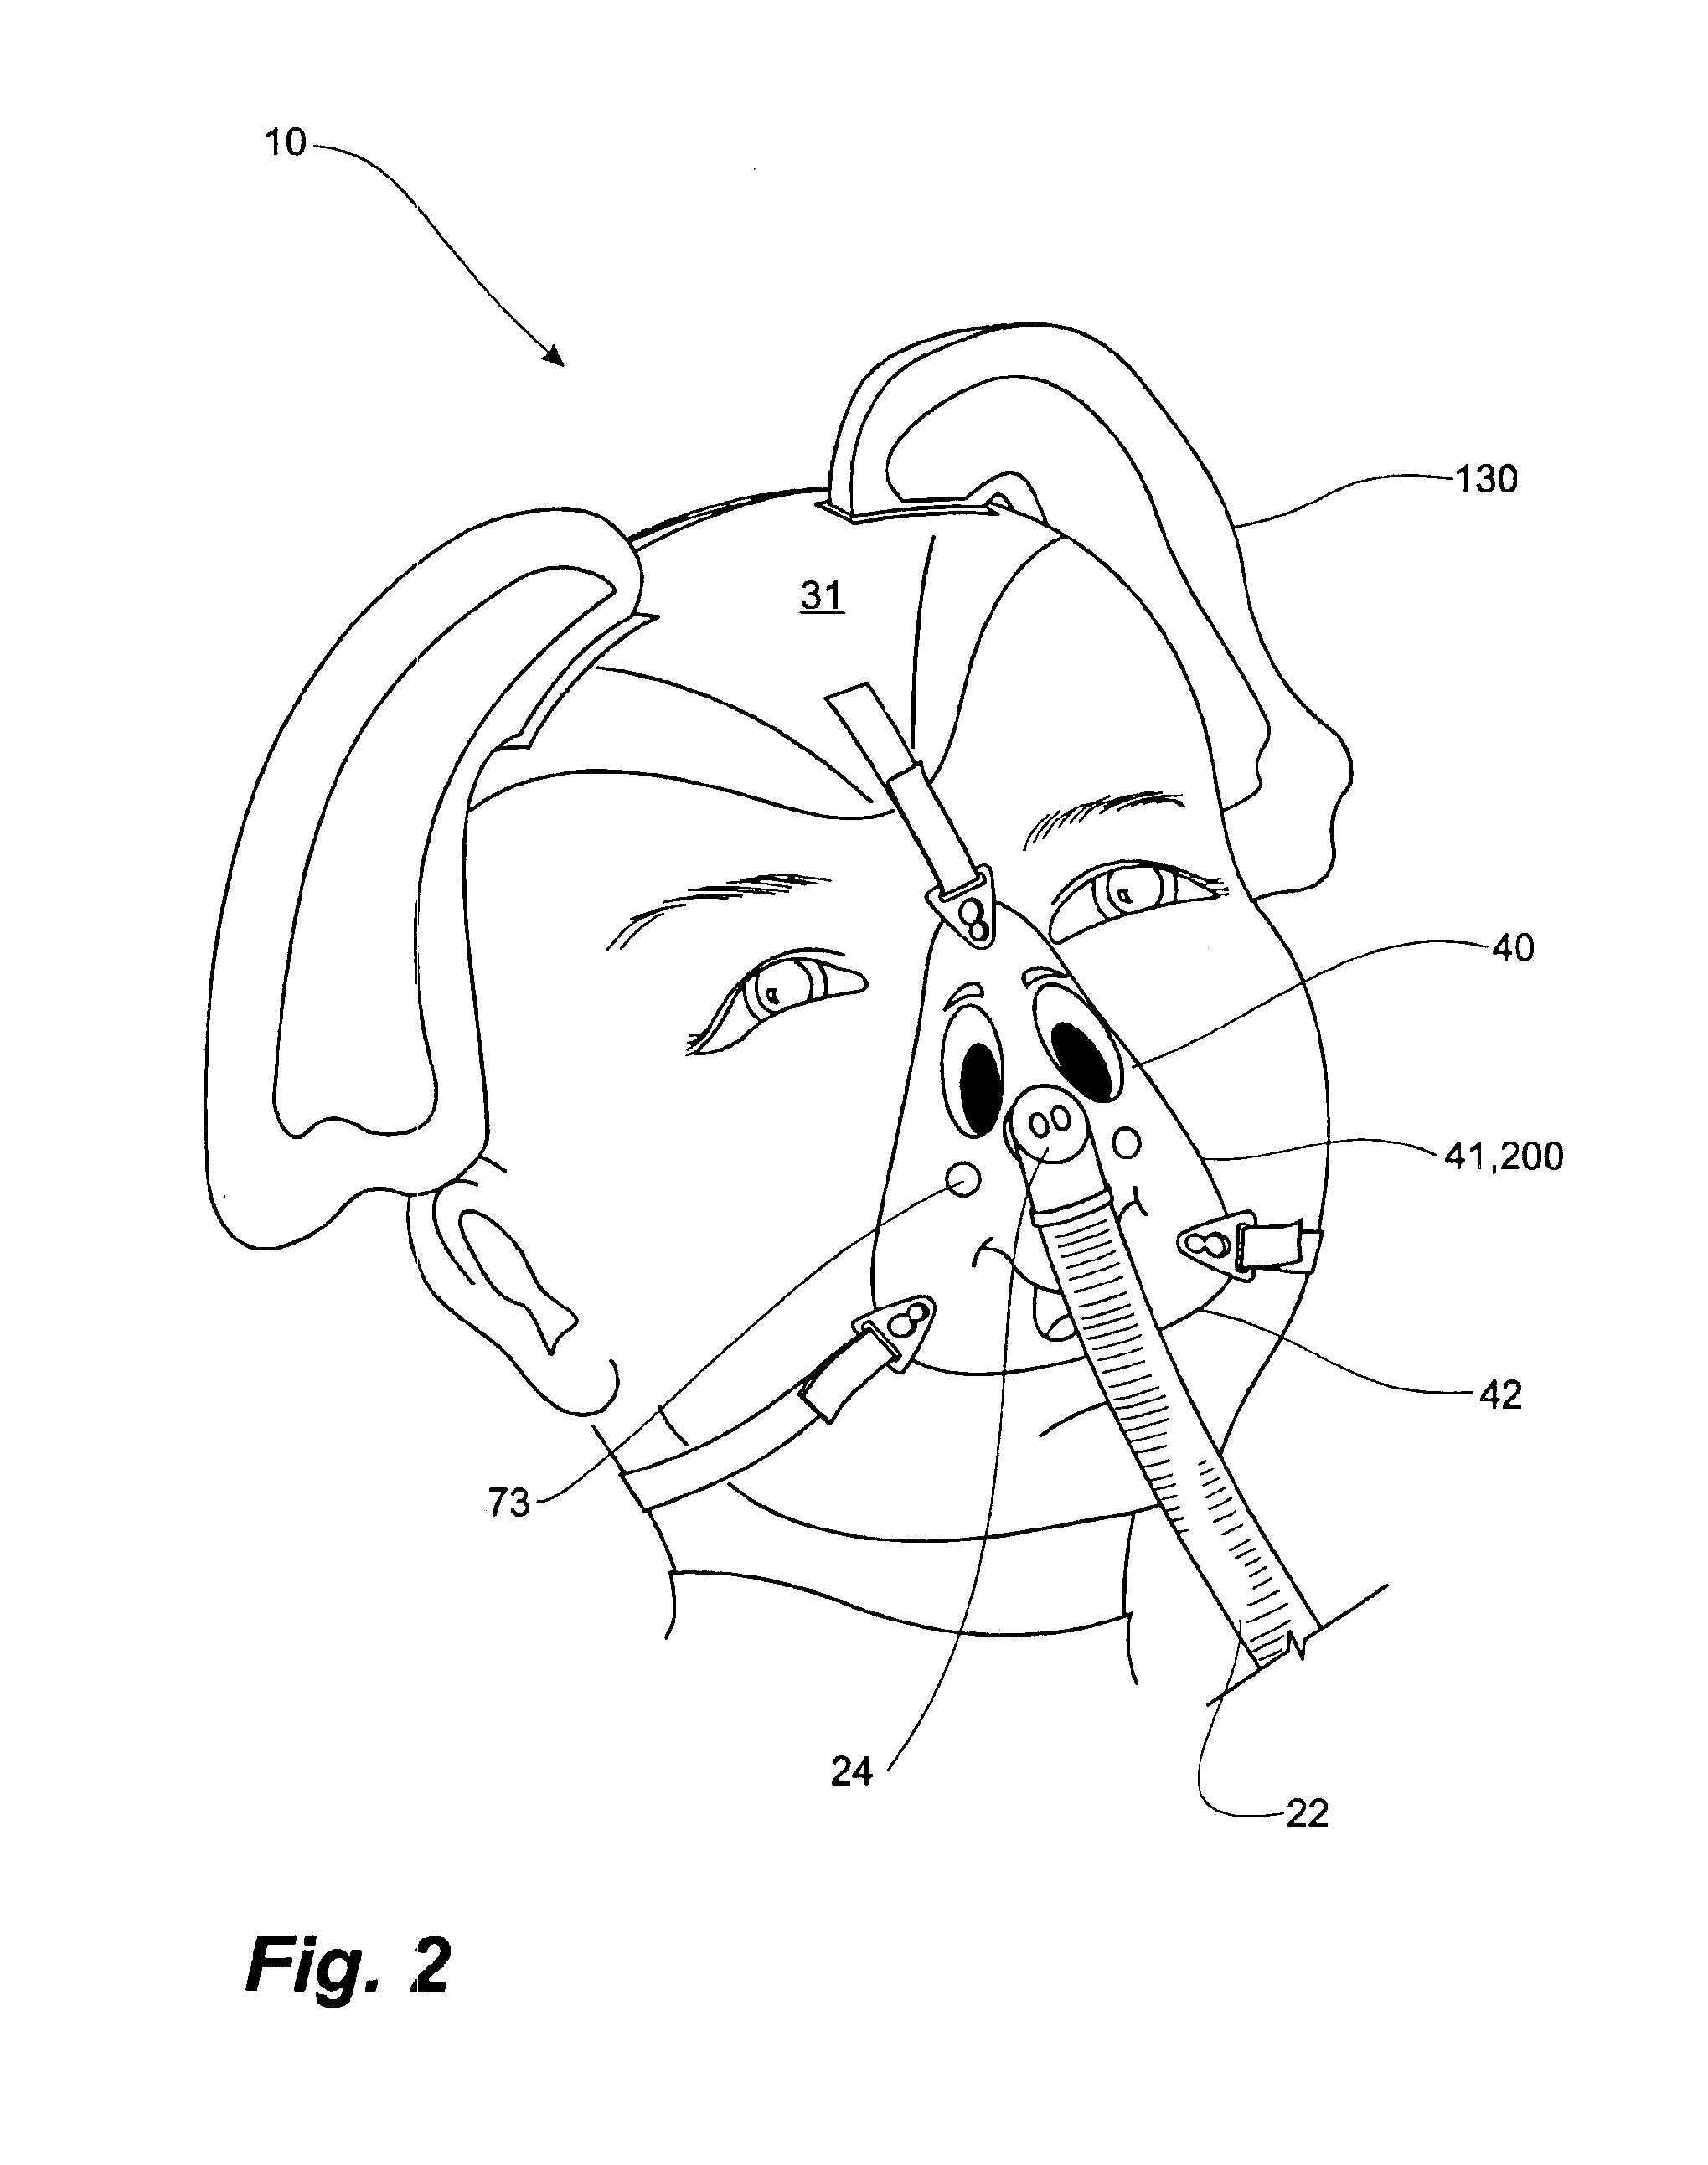 Pediatric ventilation mask and headgear system